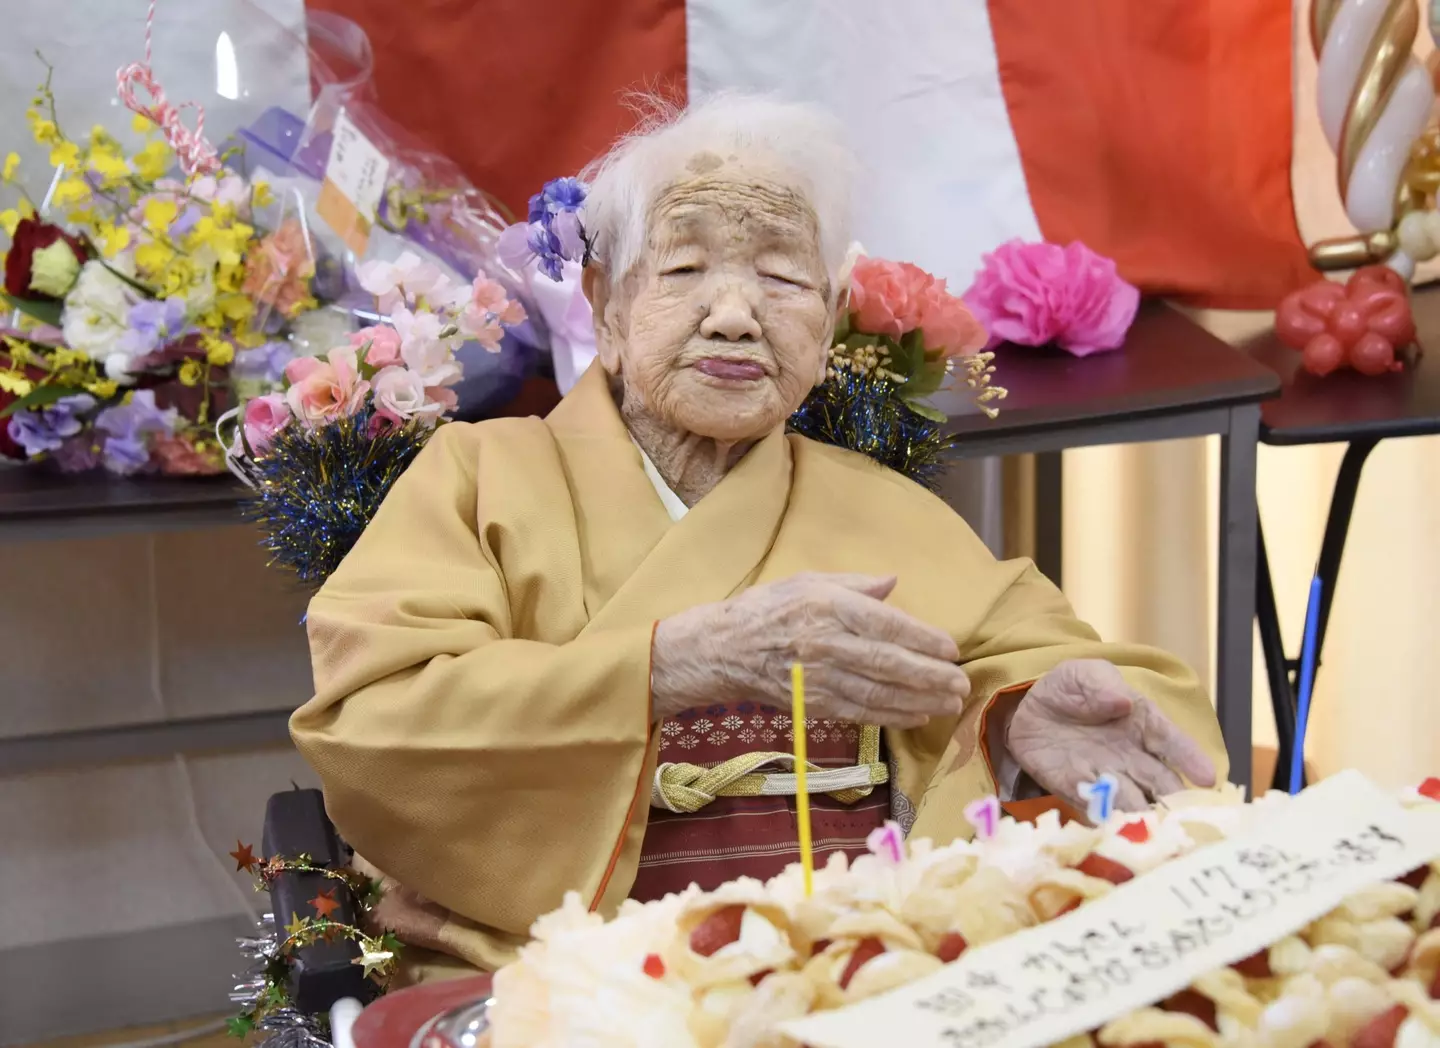 119-year-old Kane Tanaka passed away last week while in hospital.